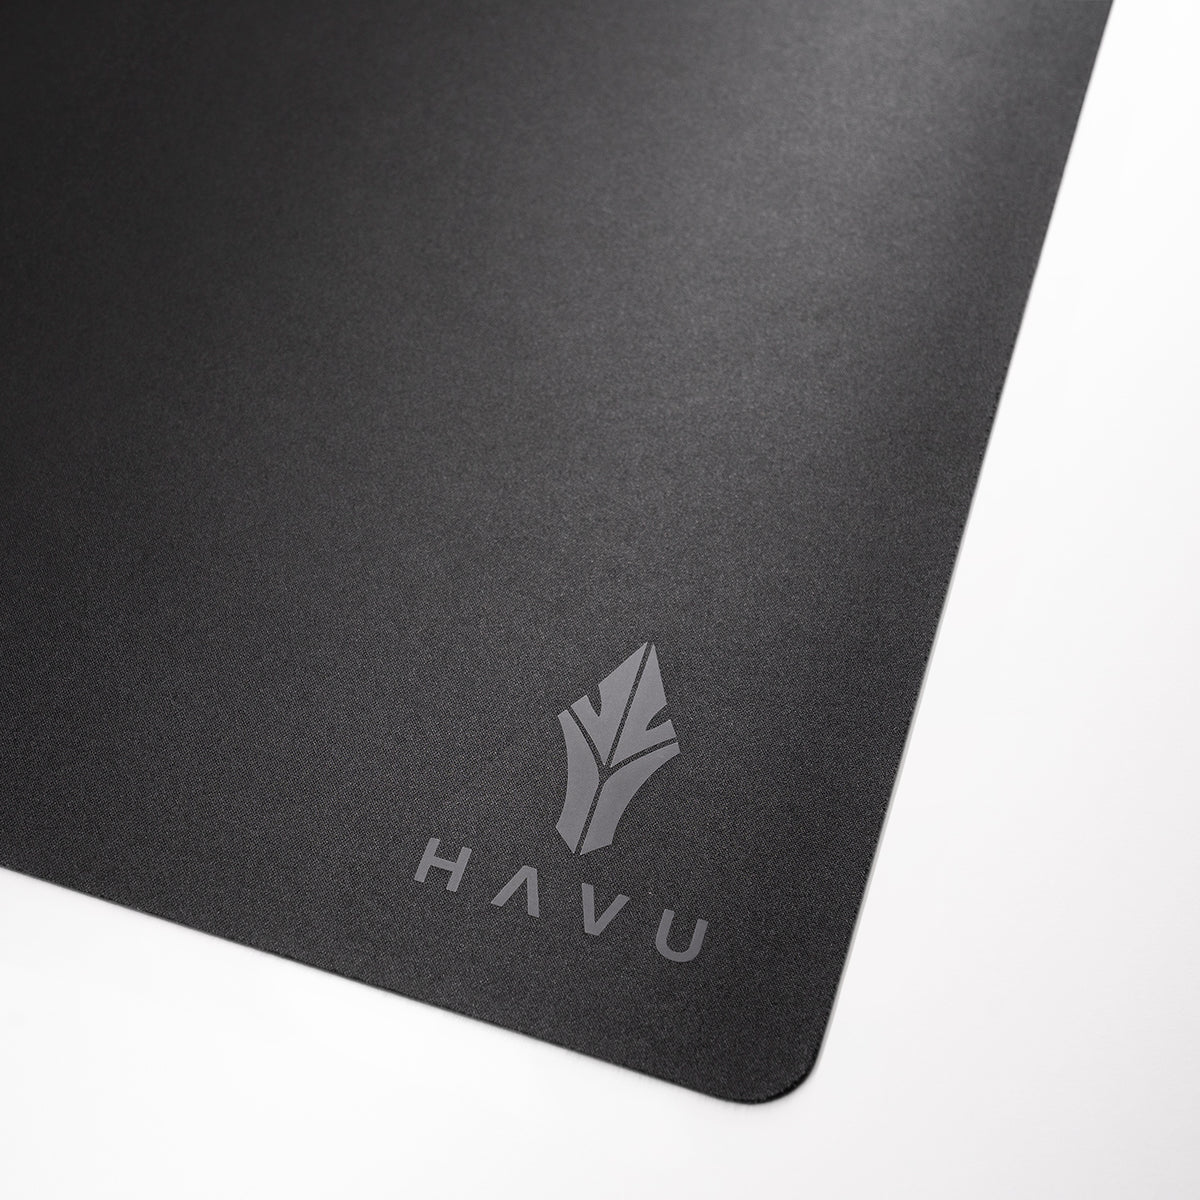 HAVU Mousepad - DARK - 900x400